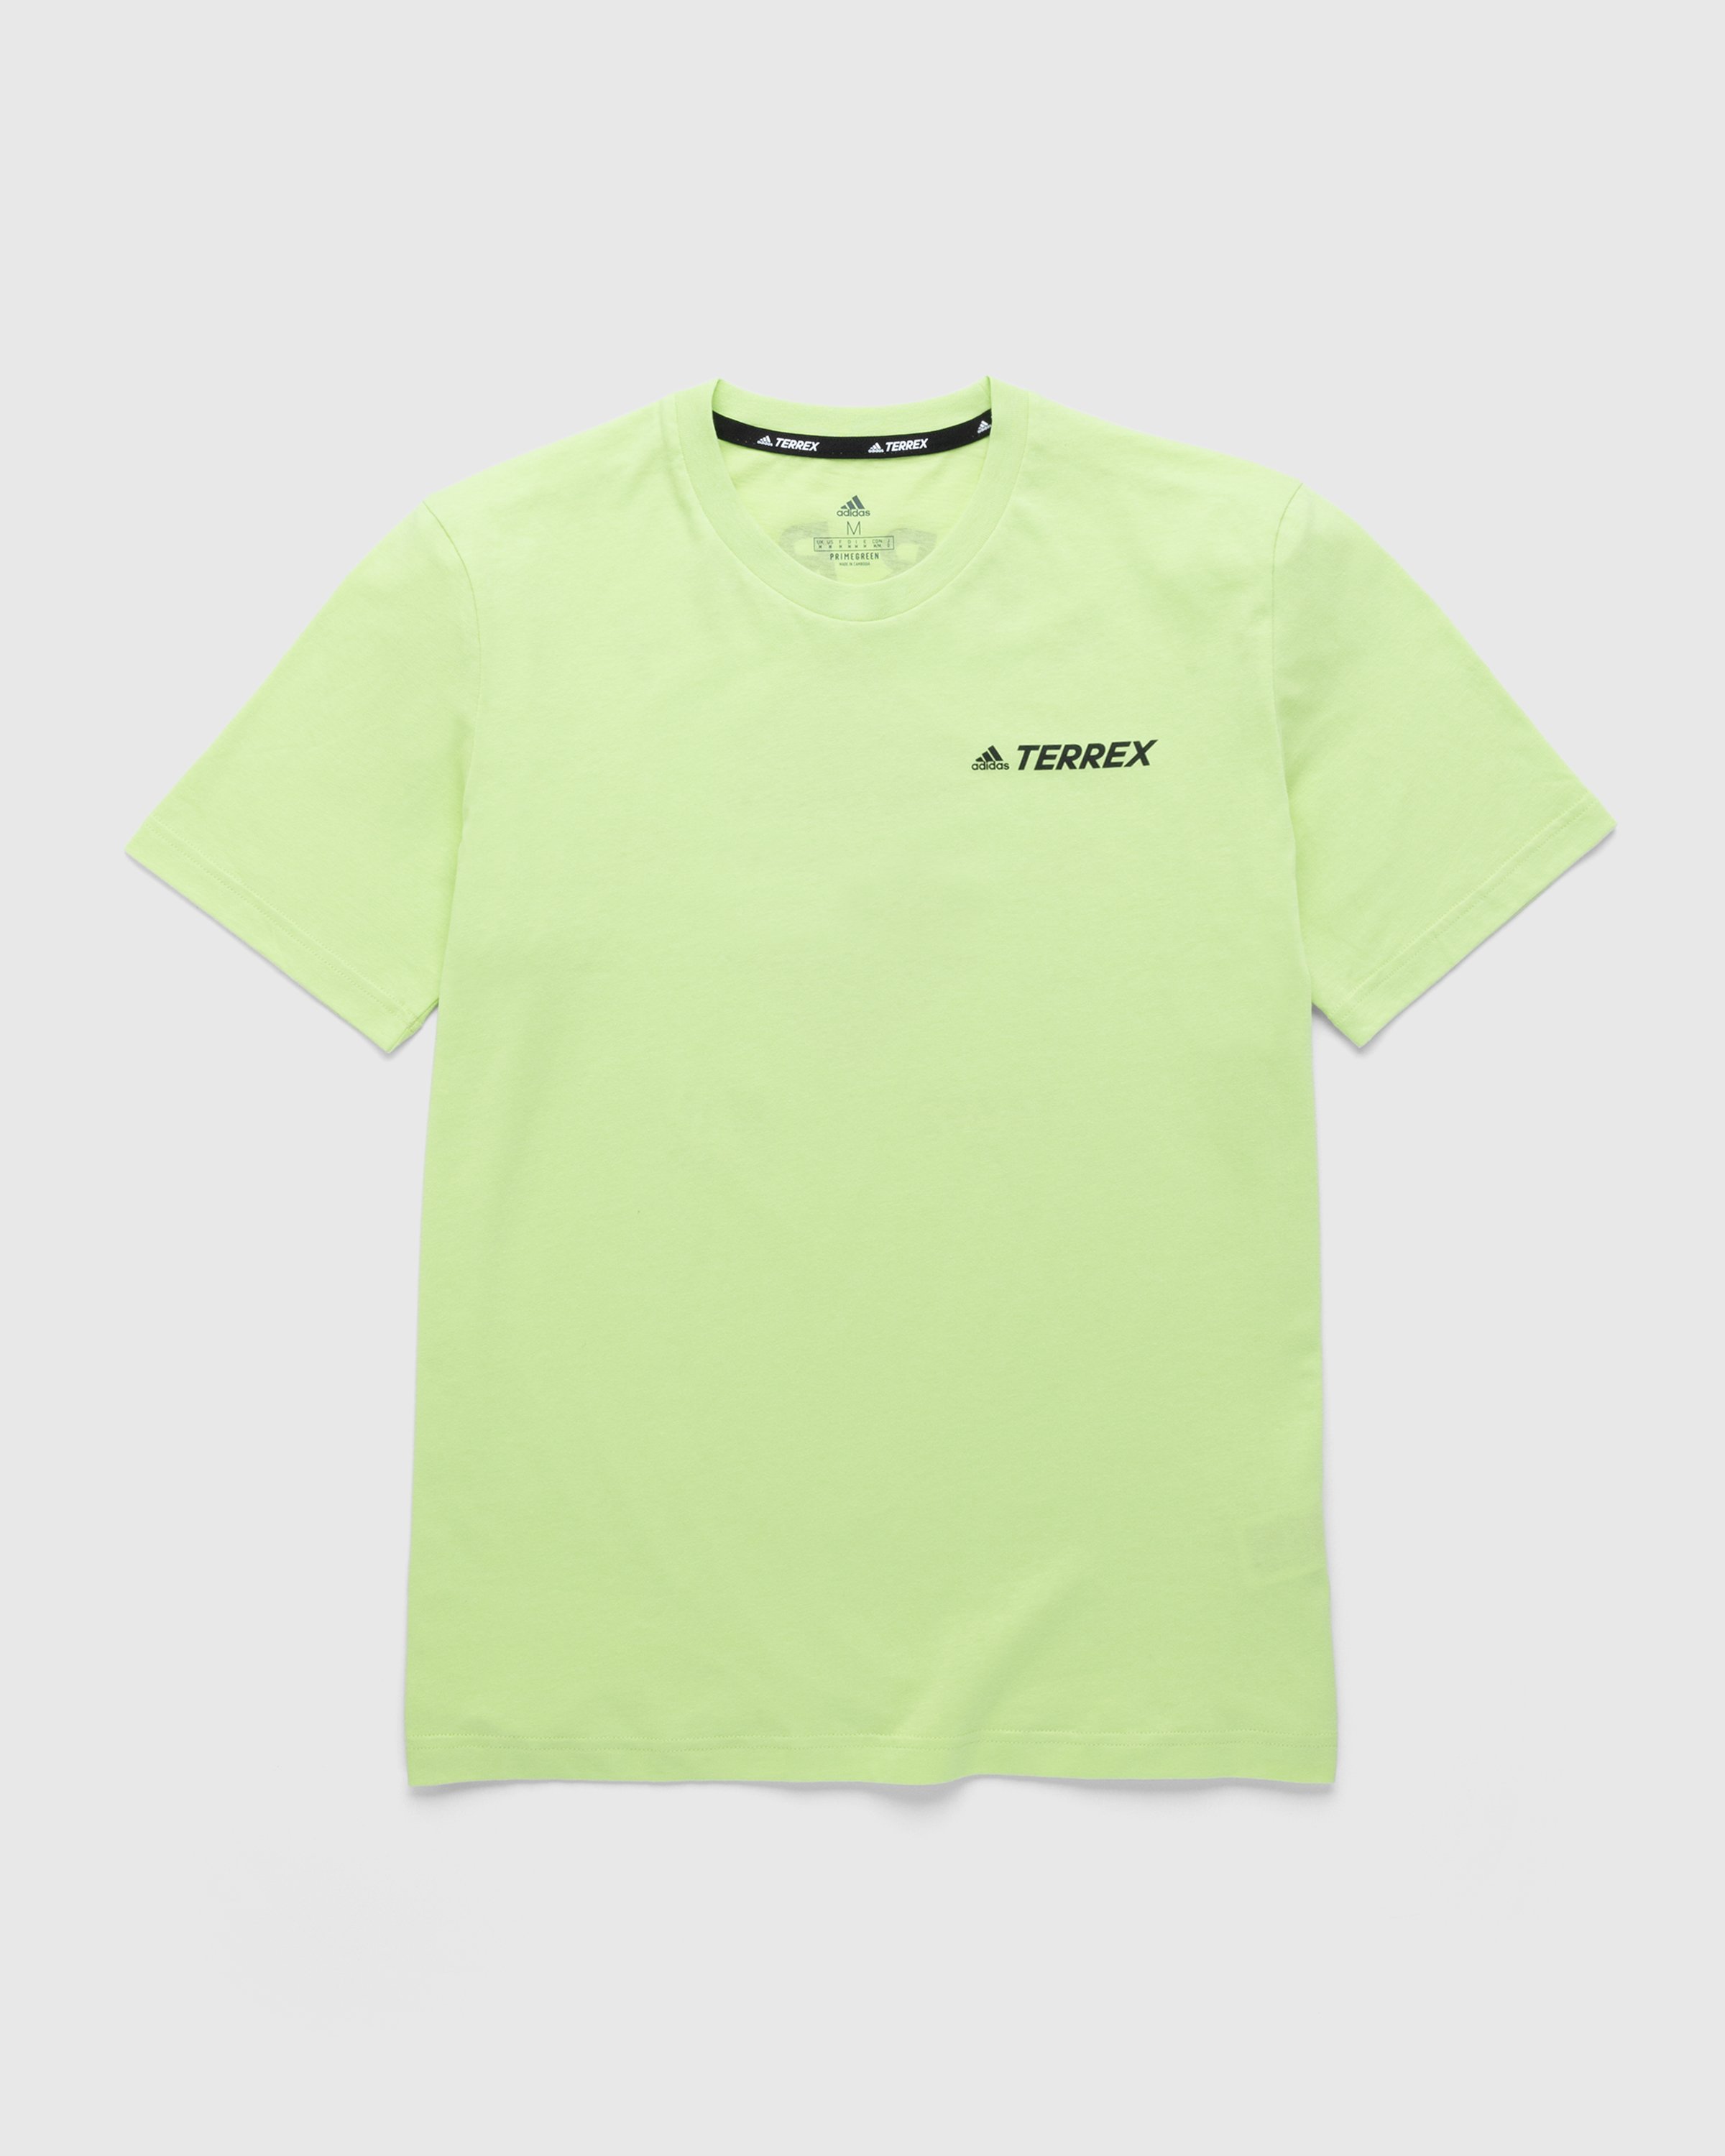 Adidas - Terrex Mountain Landscape T-Shirt Green - Clothing - Green - Image 1